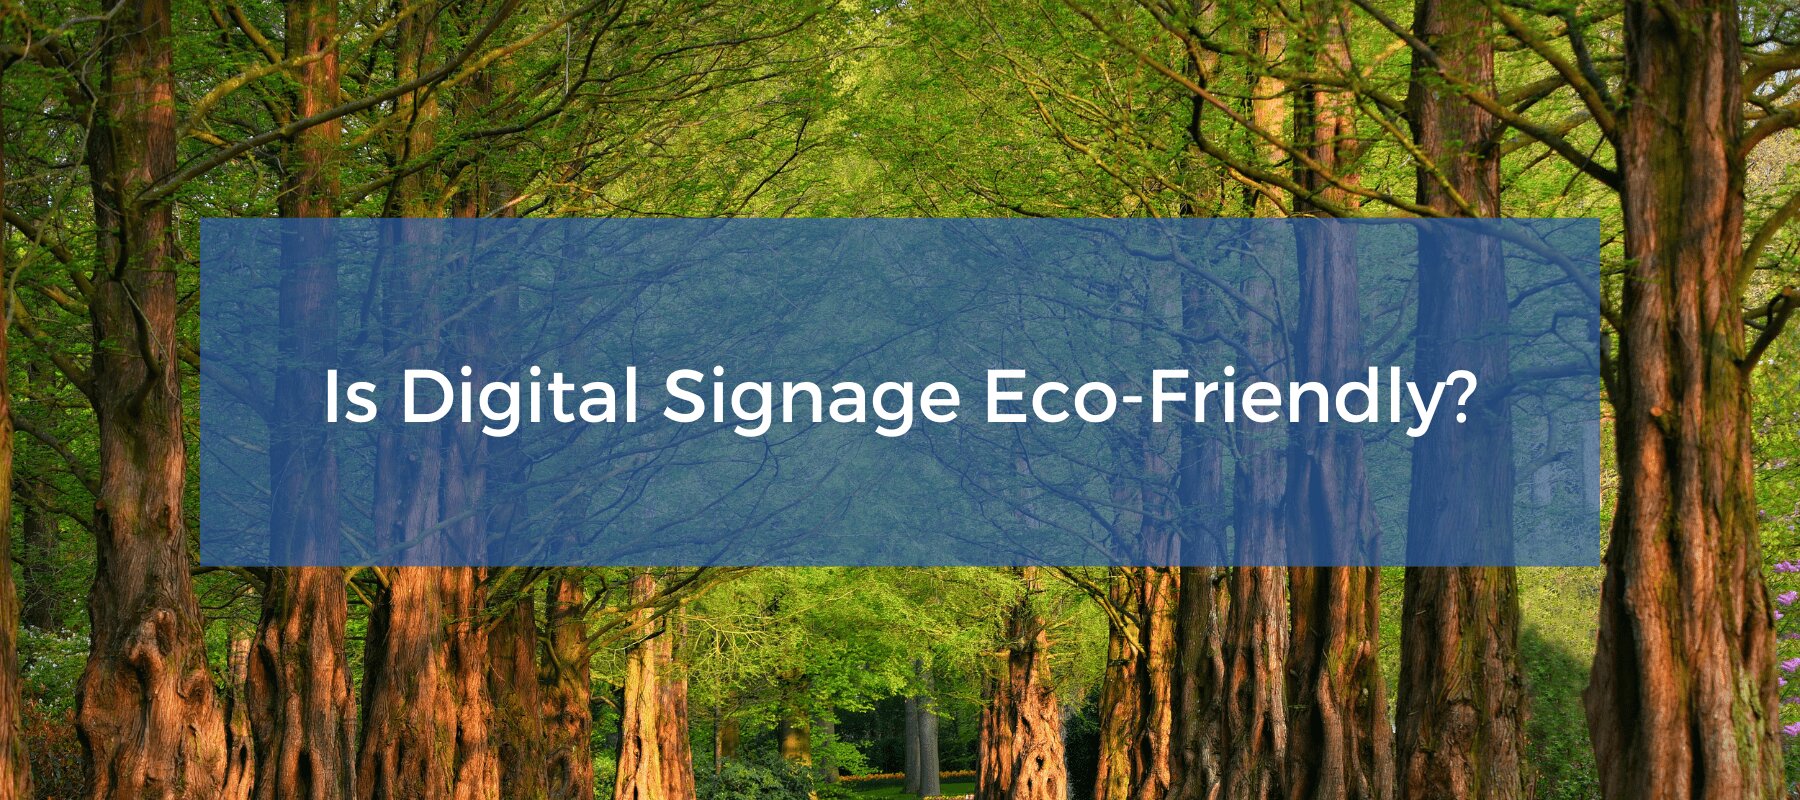 Digital signage eco-friendliness.